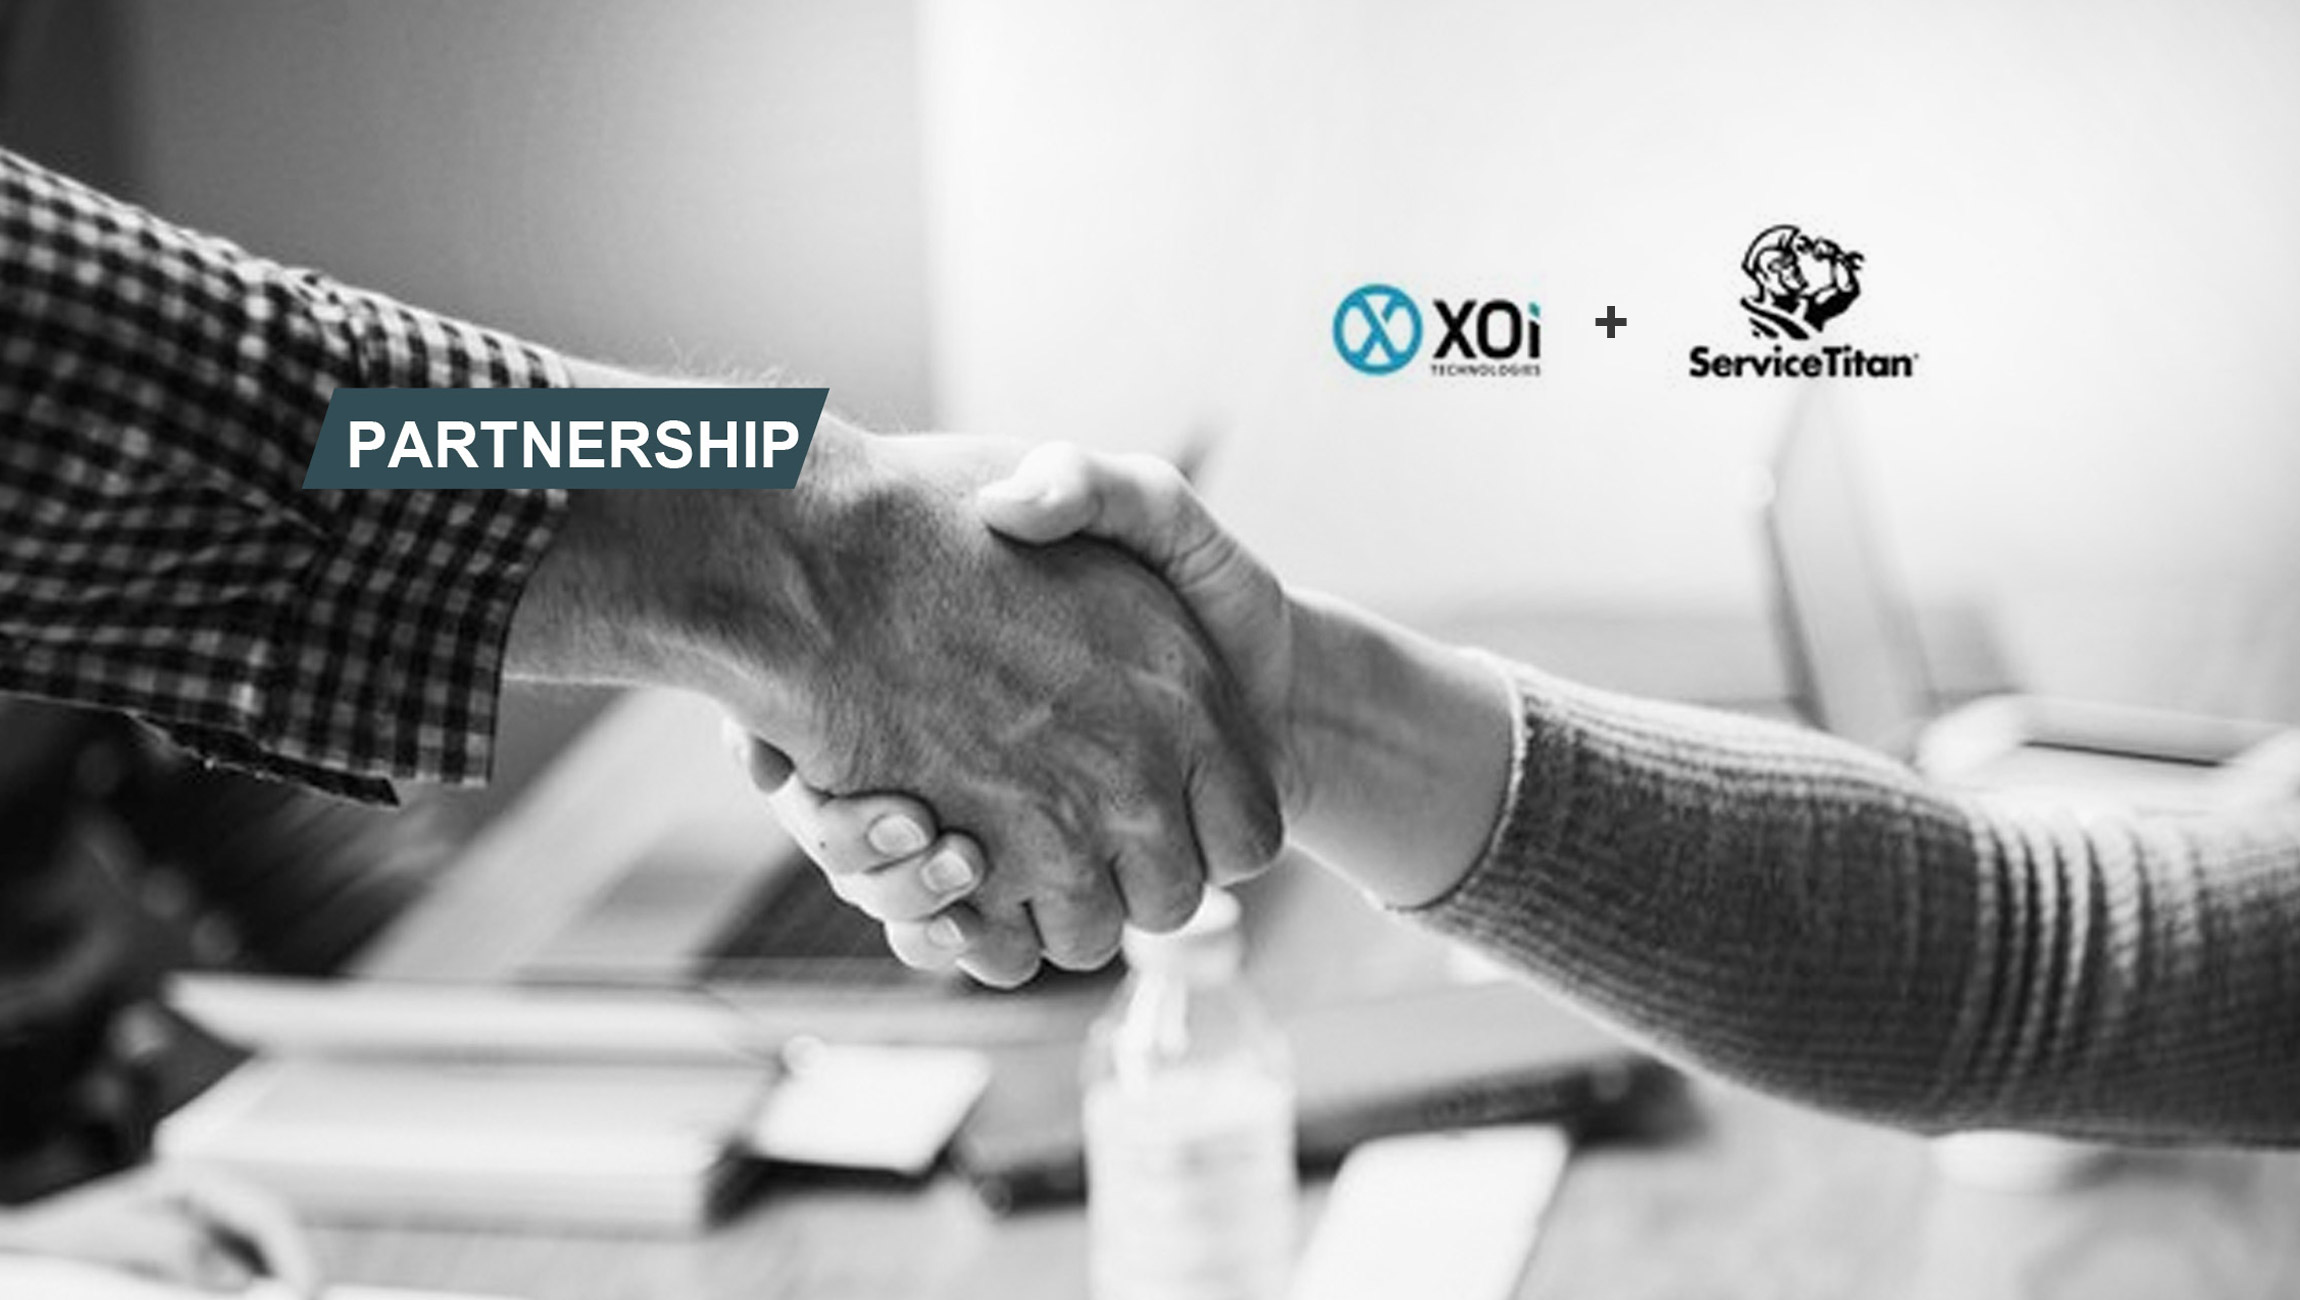 XOi Technologies Announces Strategic Partnership with ServiceTitan